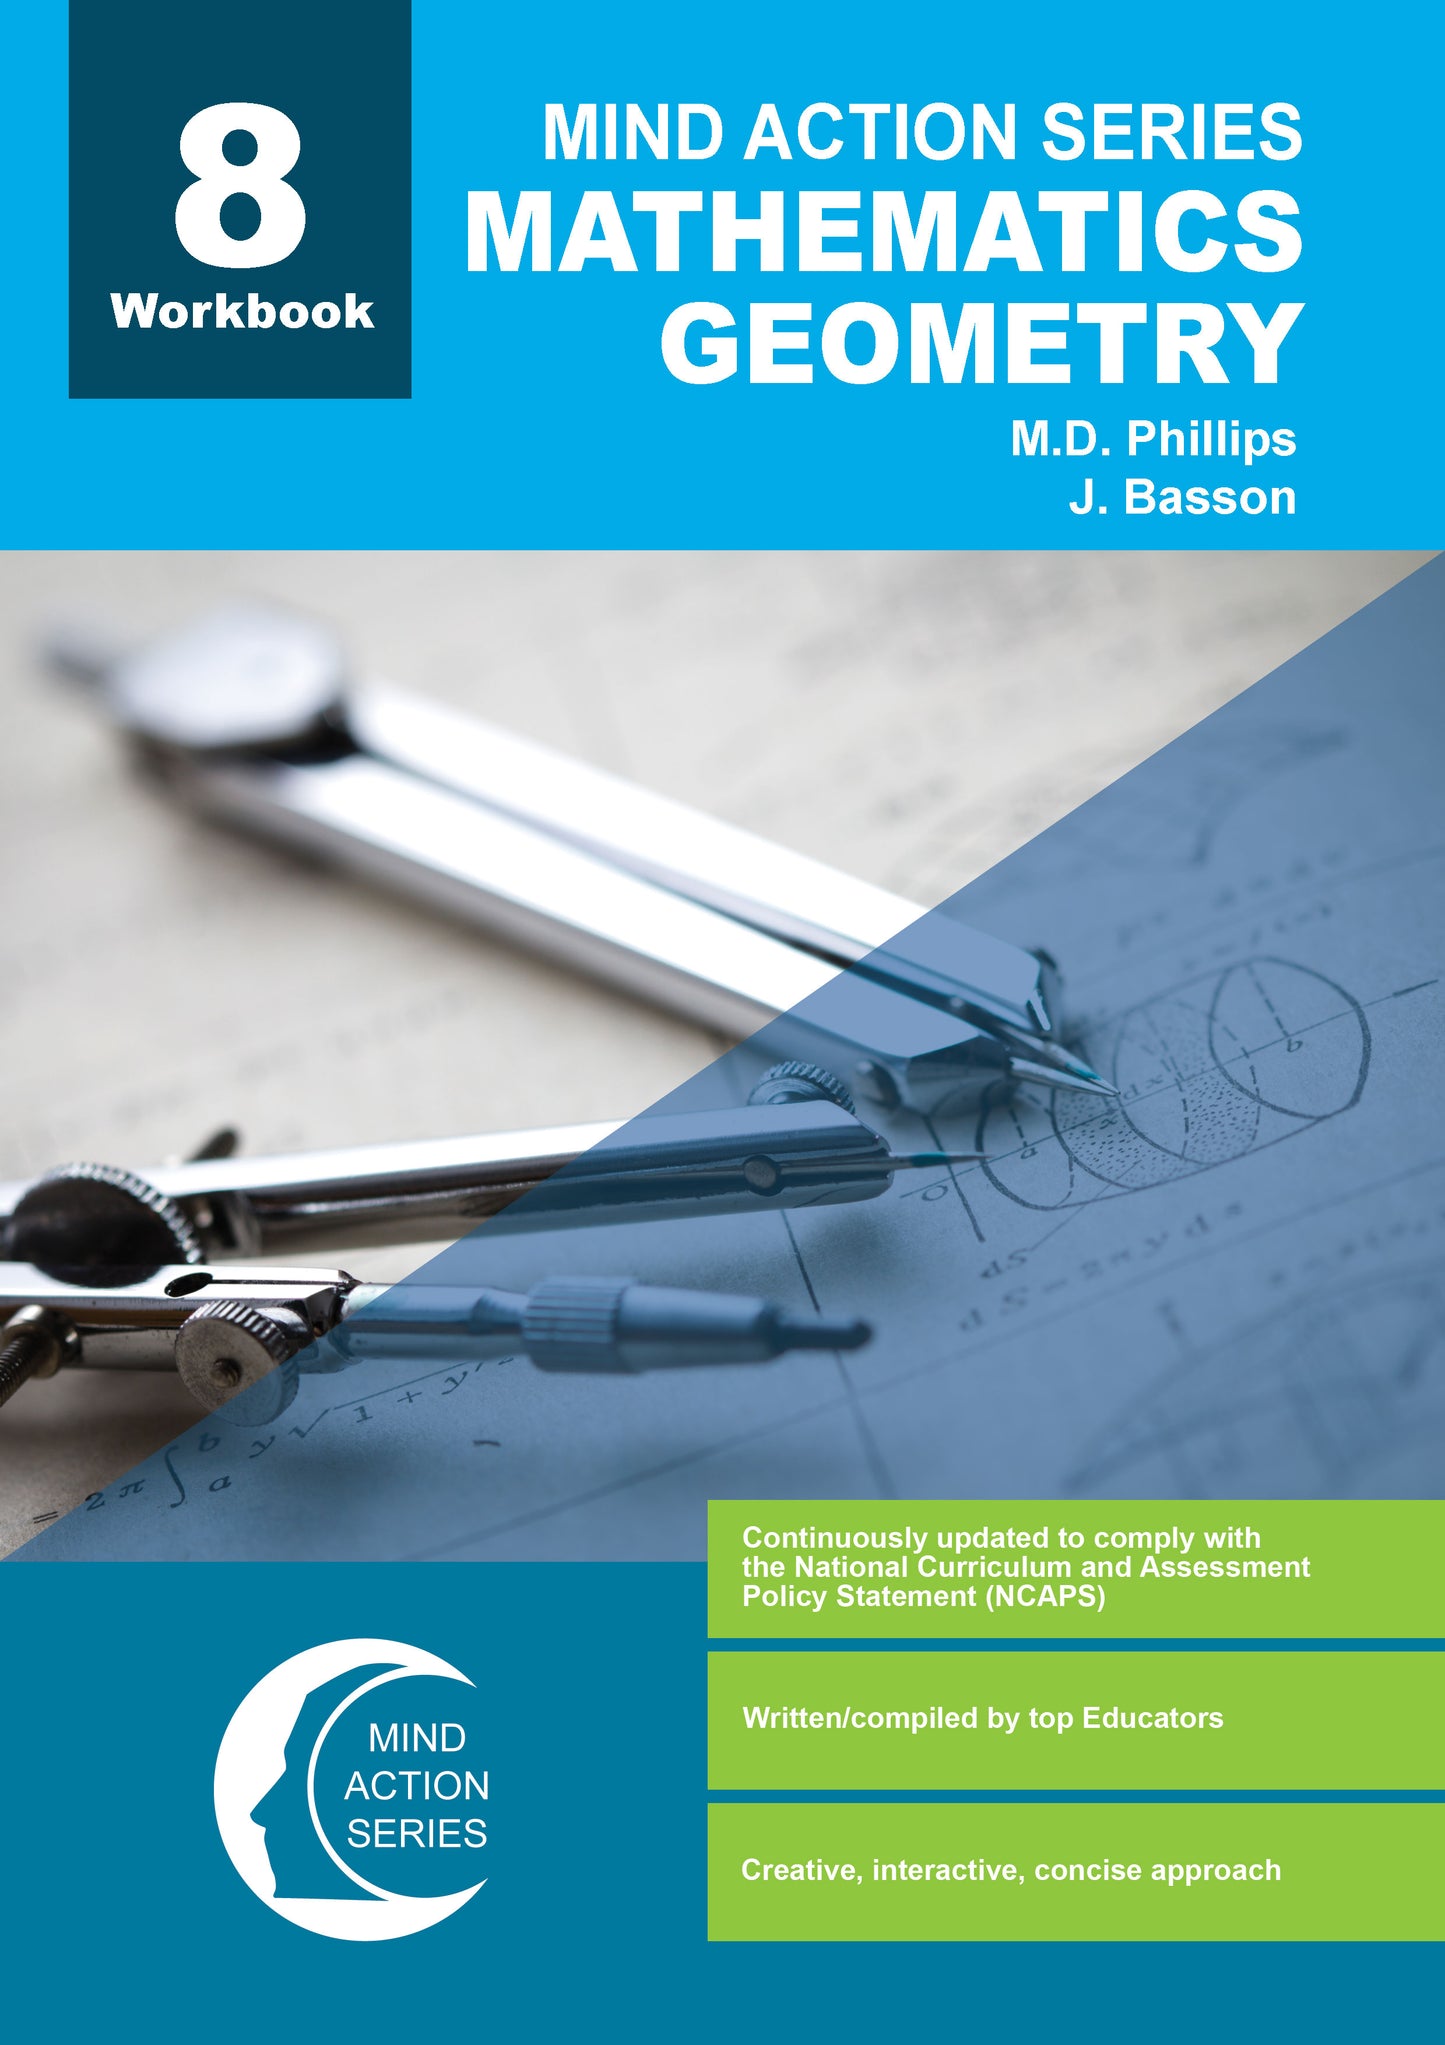 MAS Mathematics Geometry Grade 8 Workbook